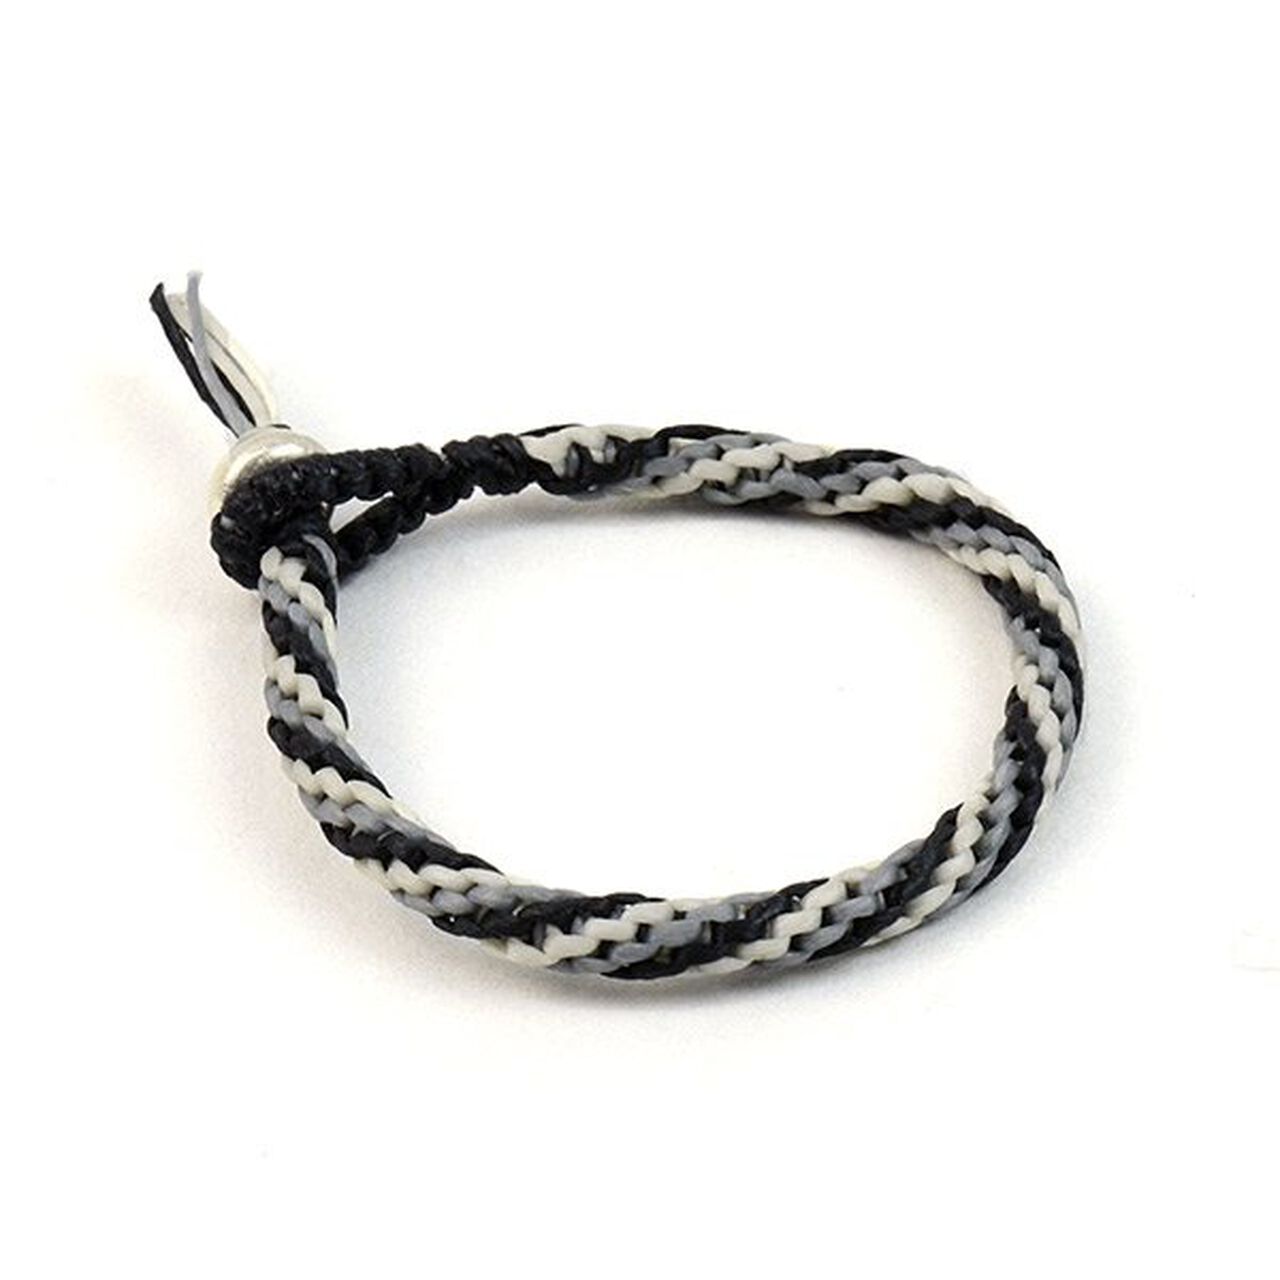 Spiral Coloured Braid Wax Cord Bracelet,Black_Grey_White, large image number 0